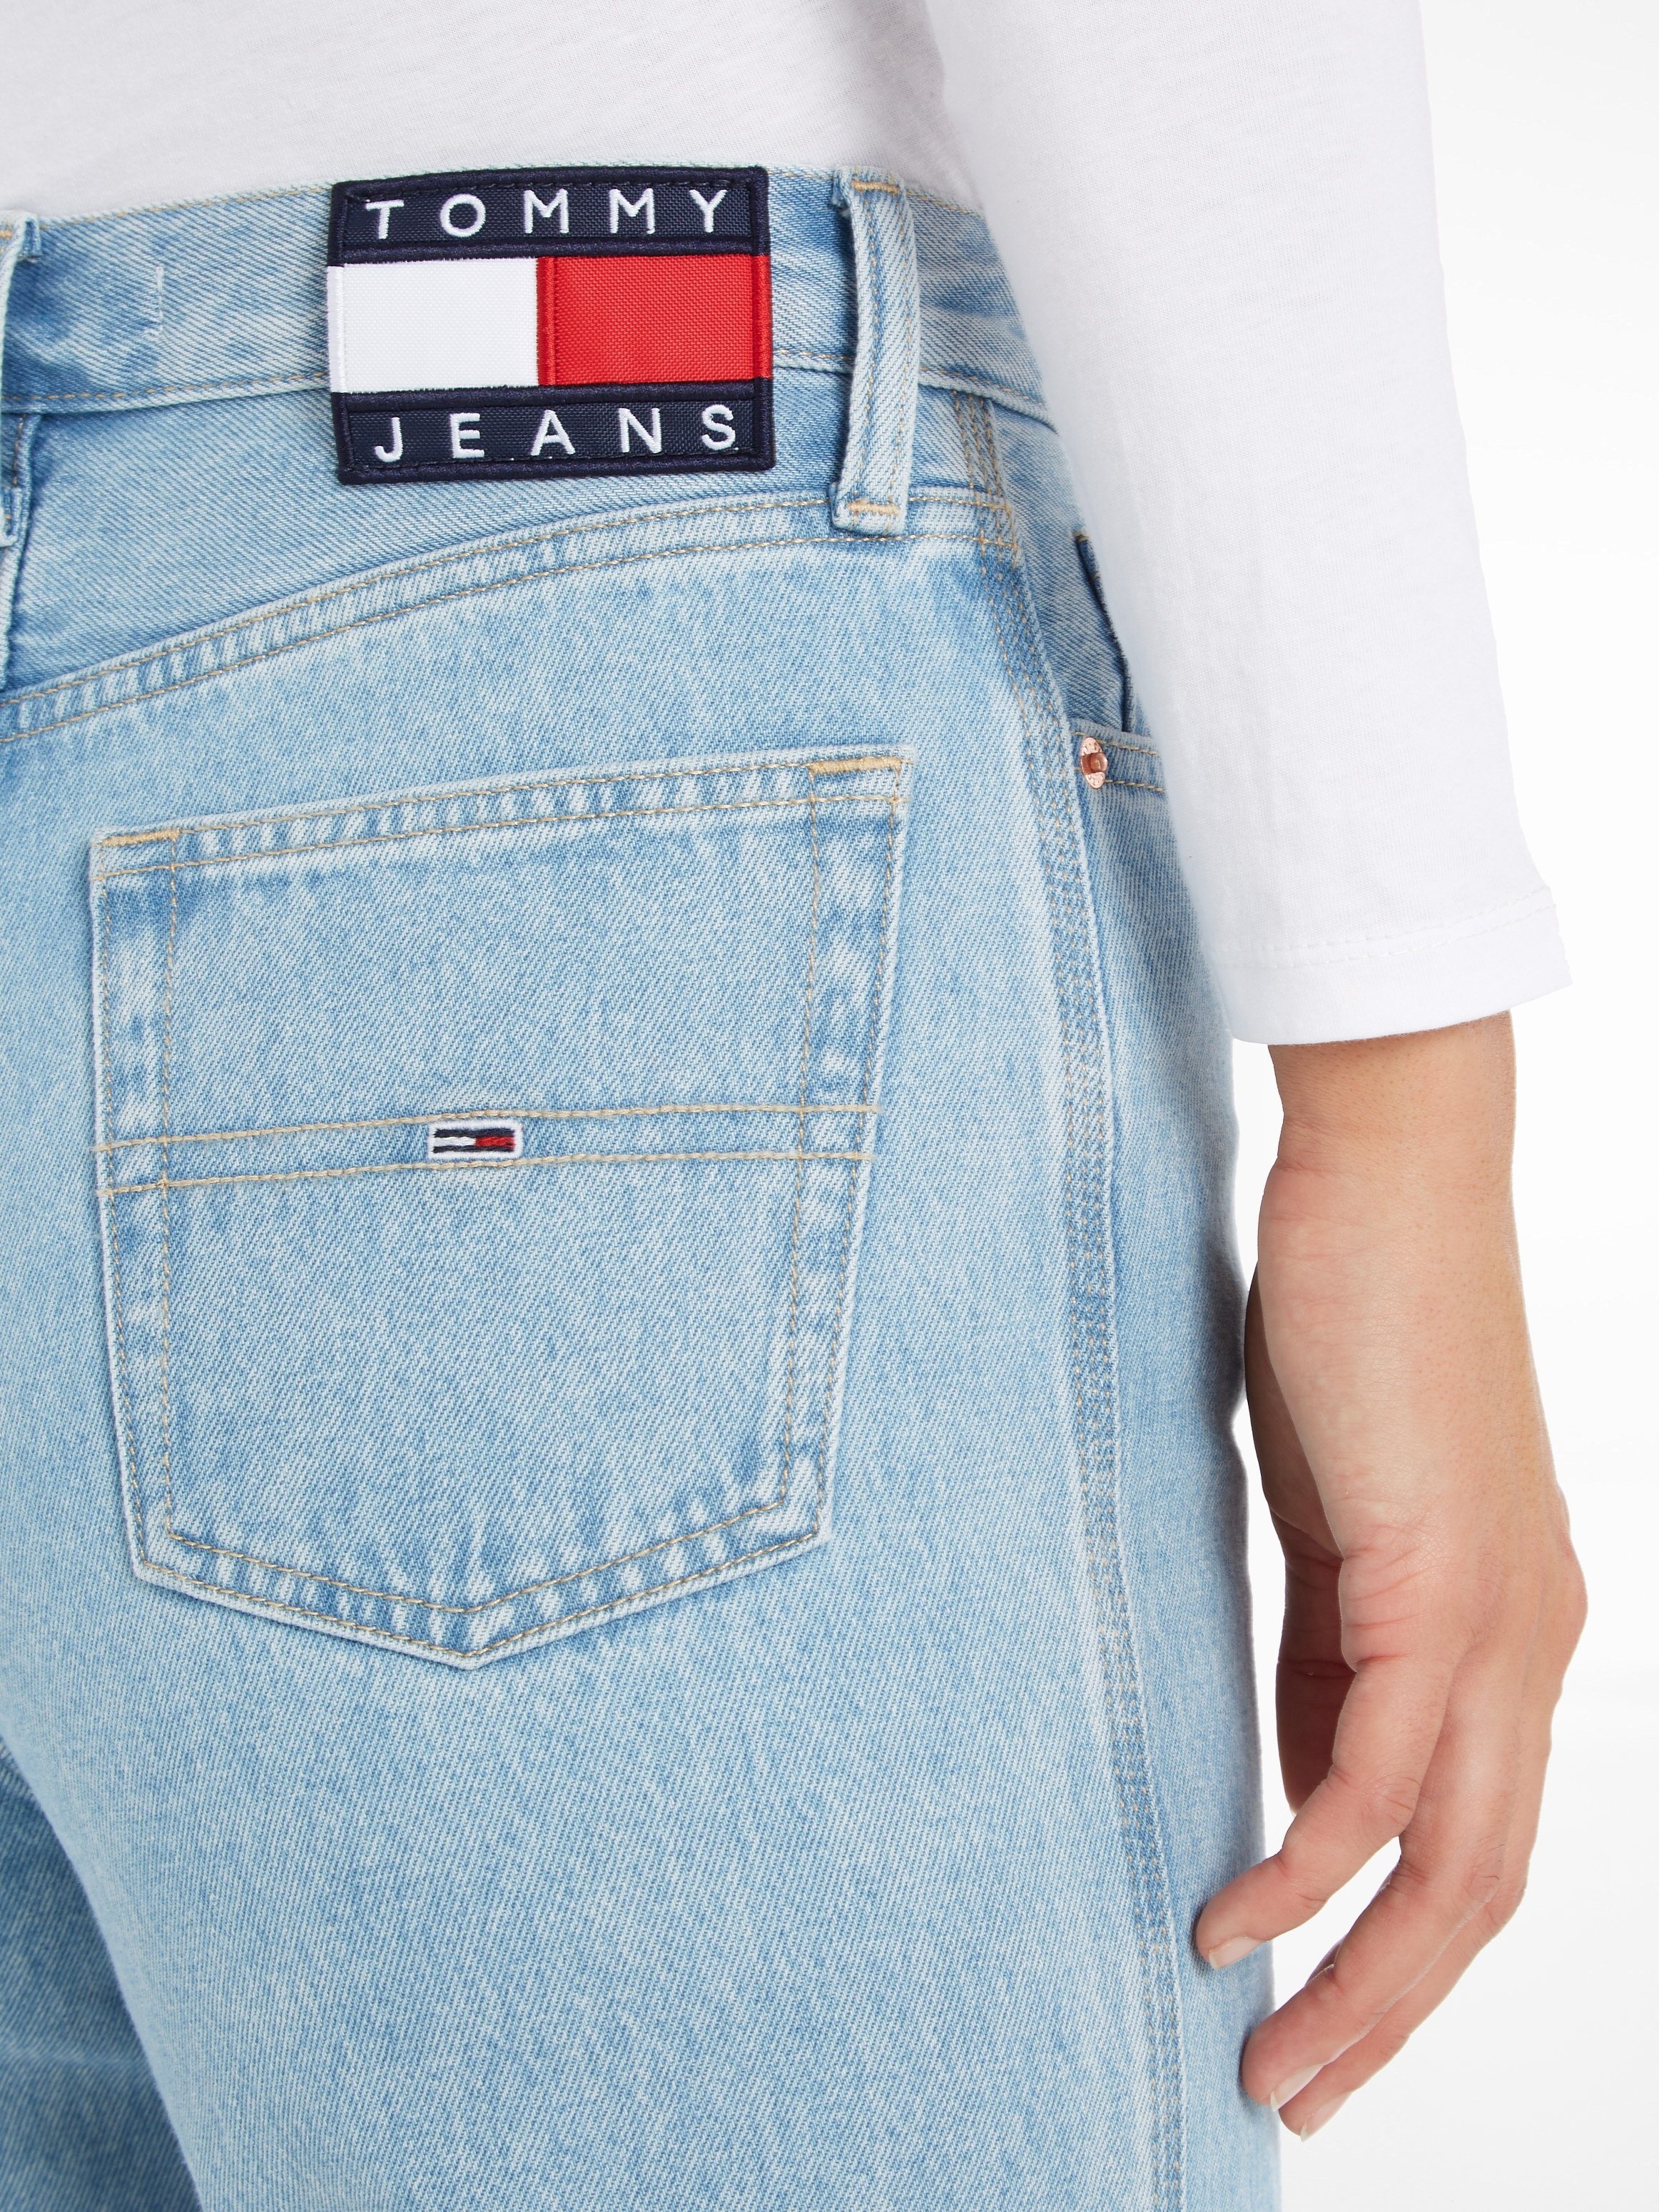 Tommy Jeans Jeans mit Tommy Weite Logobadges Jeans denim light